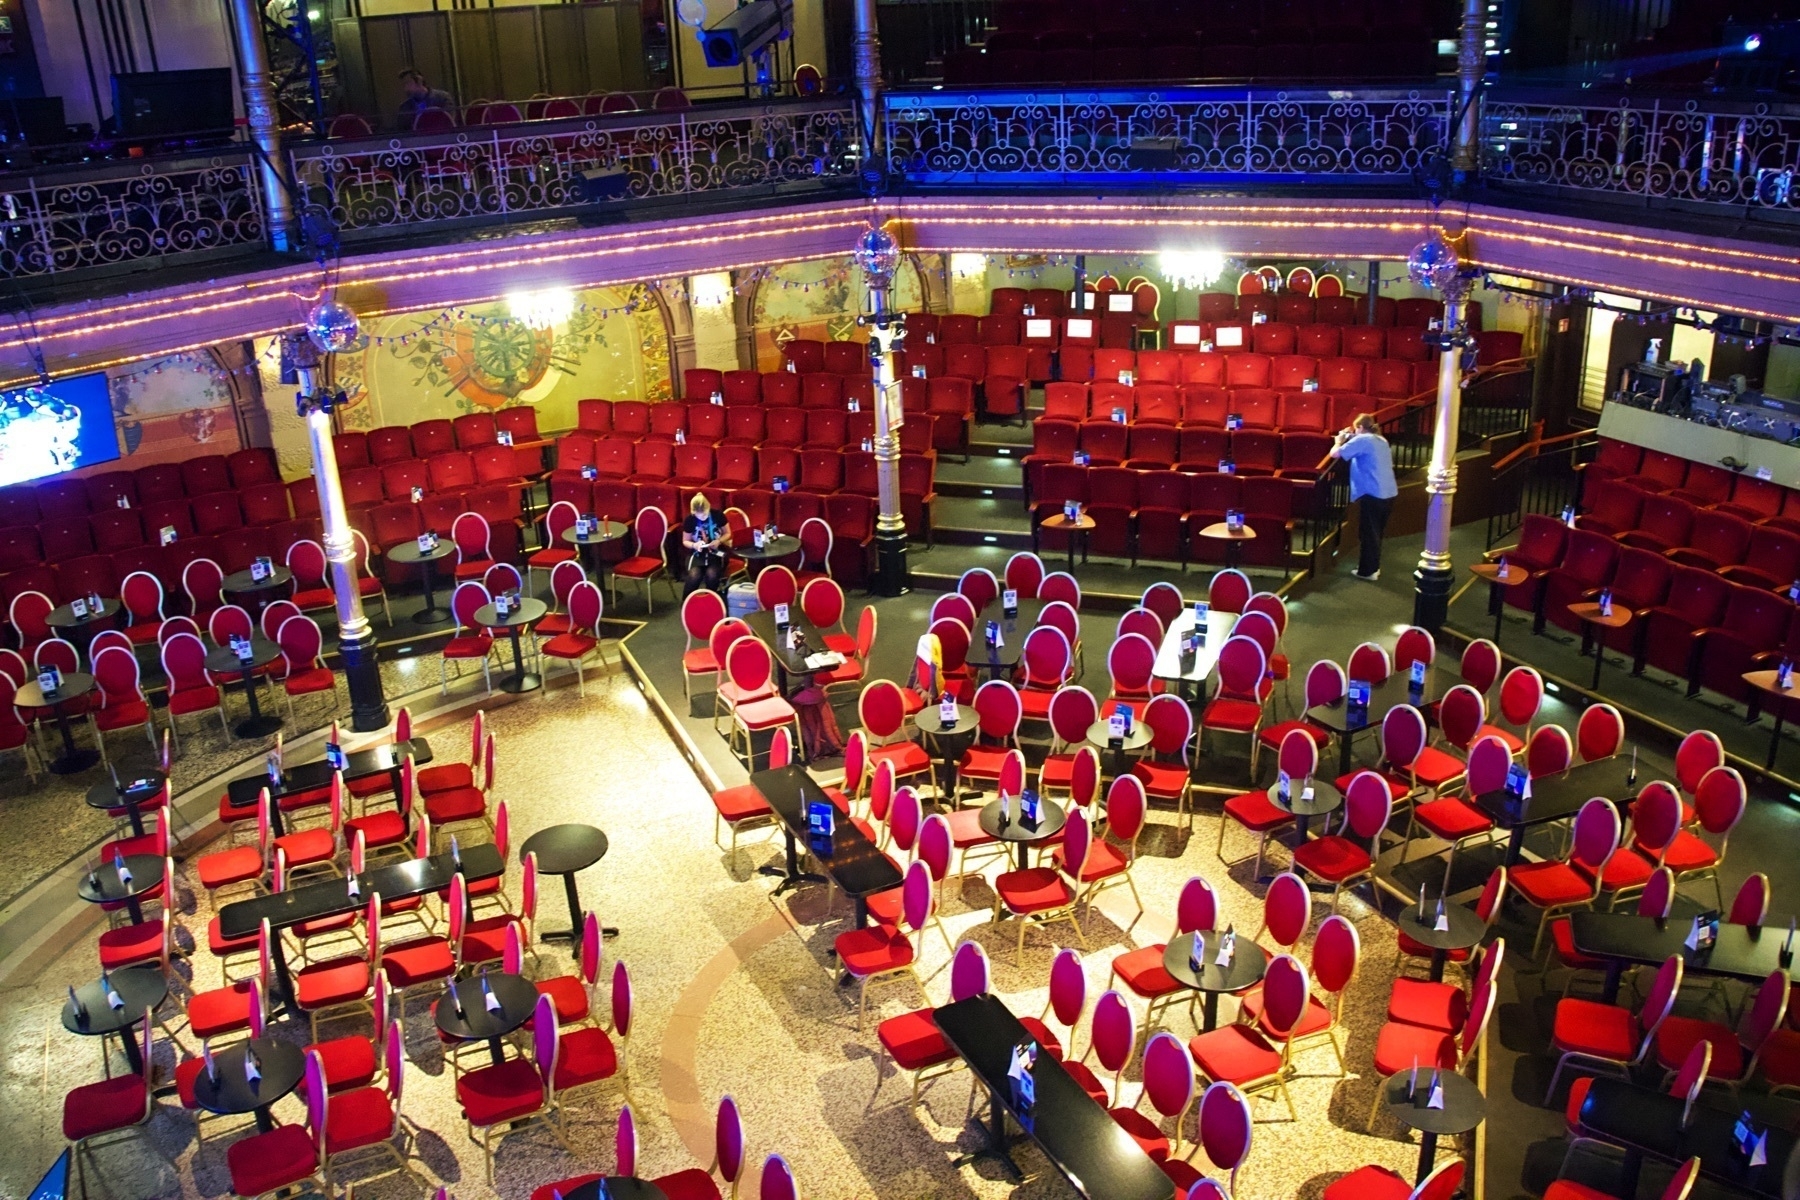 The Schmidts Tivoli theatre in Hamburg